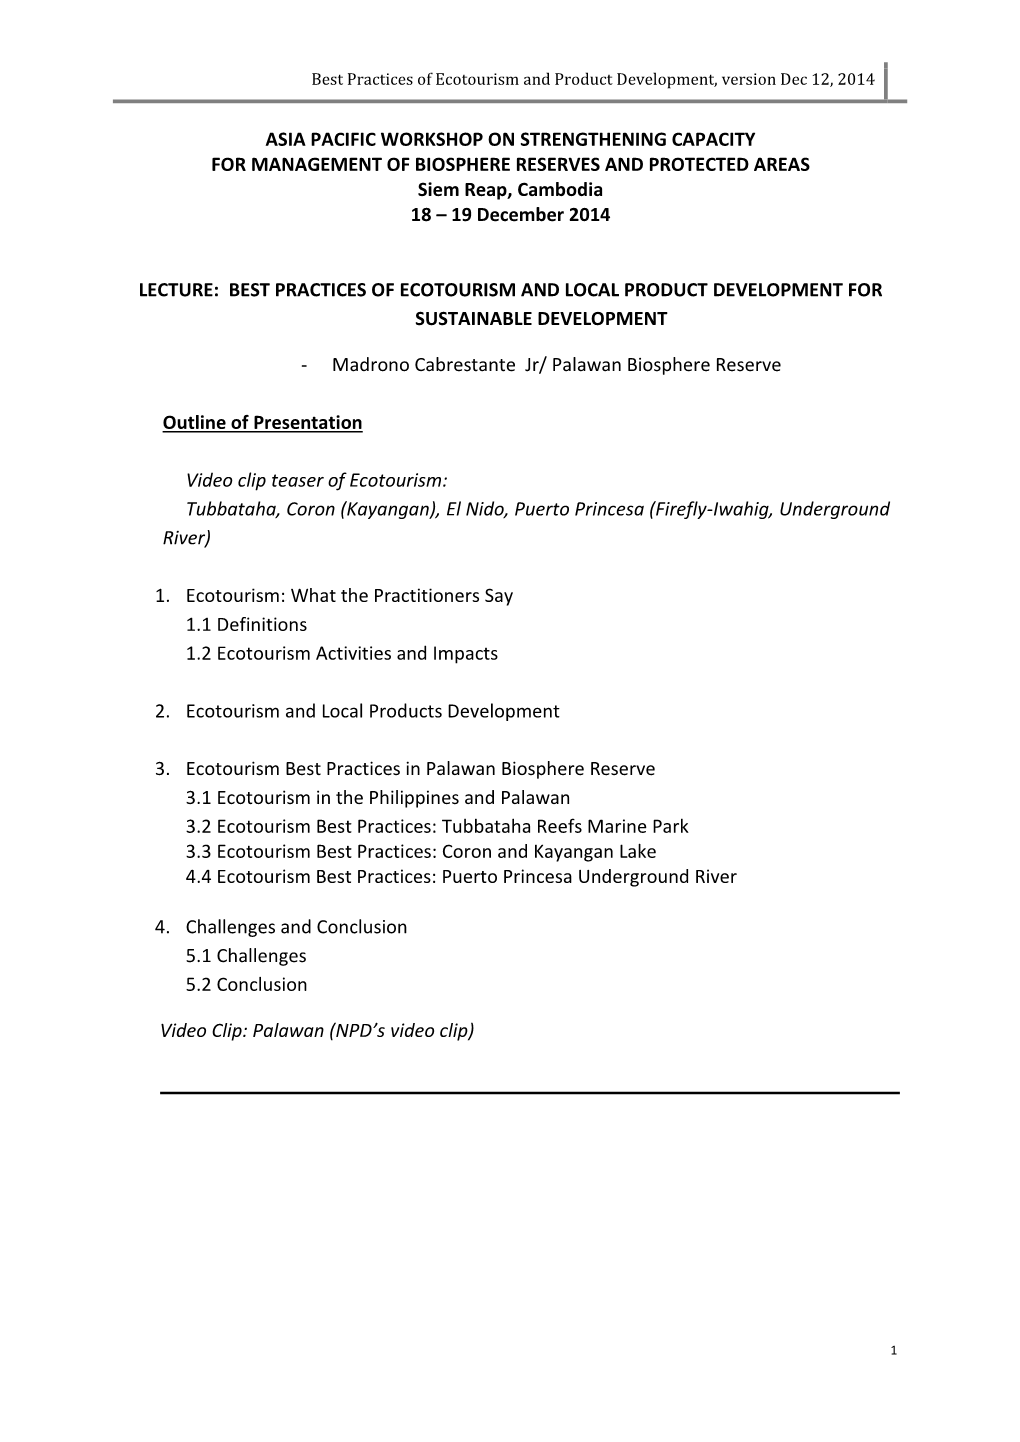 Best Practices of Ecotourism and Product Development, Version Dec 12, 2014